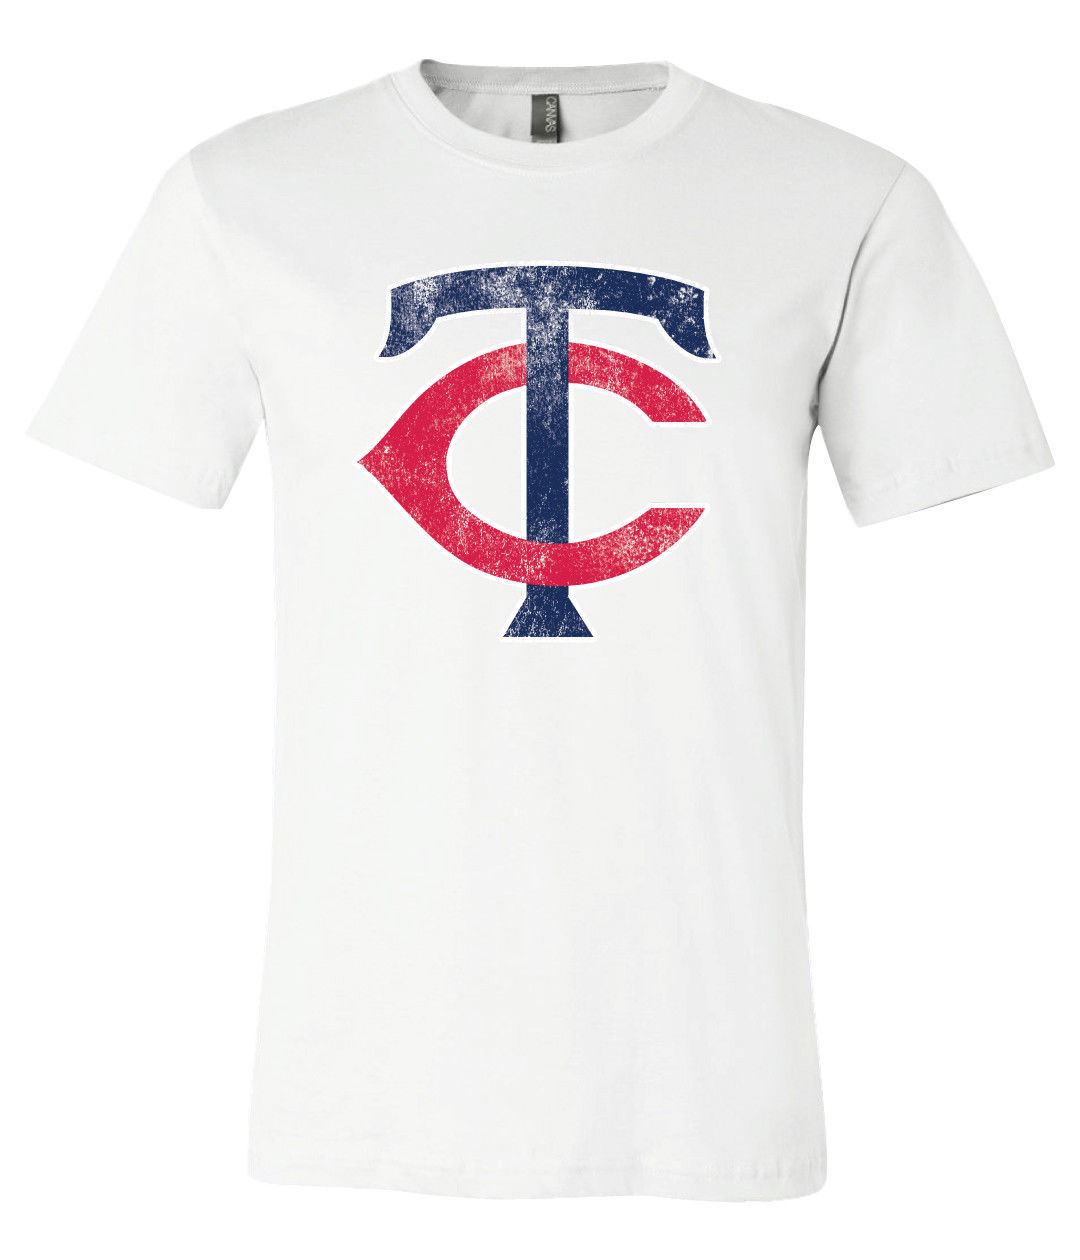 Minnesota Twins TC logo Distressed Vintage logo T-shirt 6 Sizes S-3XL!